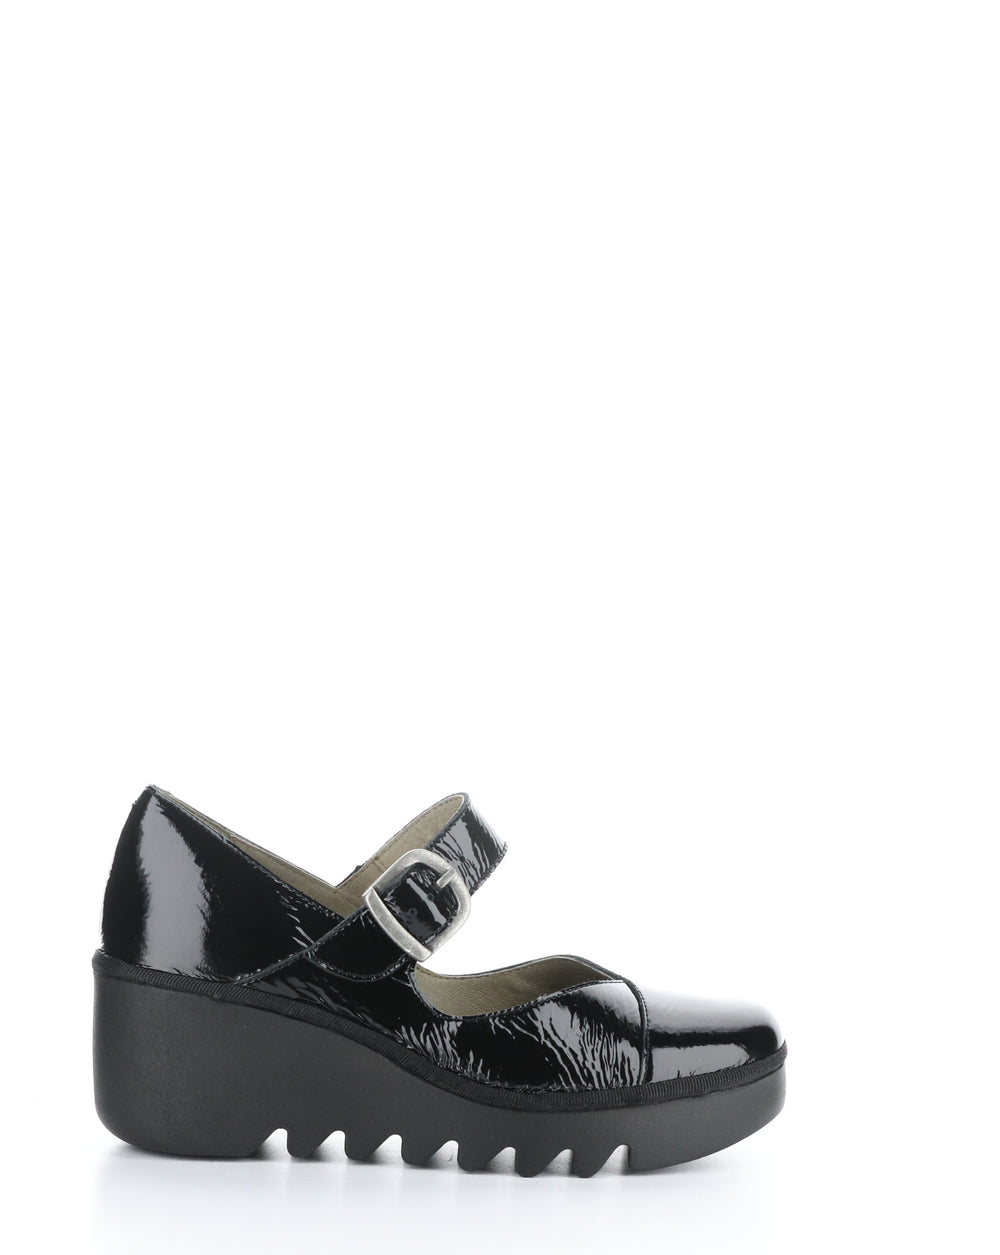 BAXE428FLY 003 BLACK Velcro Shoes